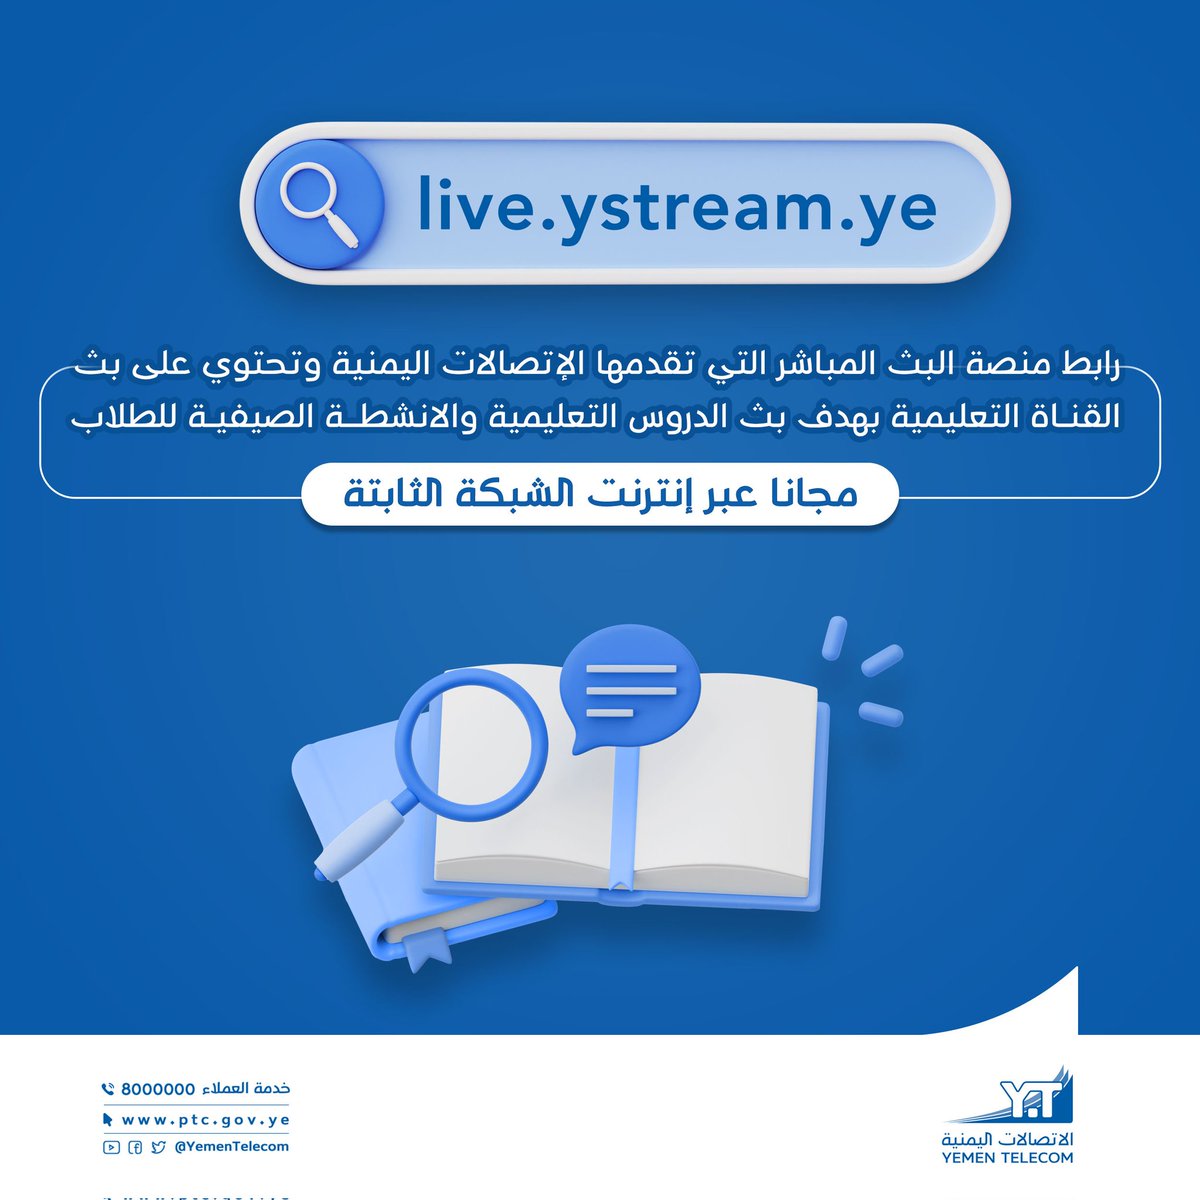 live.ystream.ye أعلاه رابط منصة البث المباشر التي تقدمها الإتصالات اليمنية والتي تحتوي بث القناة التعليمية بهدف بث الدروس التعليمية والانشطة الصيفية للطلاب وهي مجانا عبر إنترنت الشبكة الثابتة. x.com/AlnomeirMosfer…